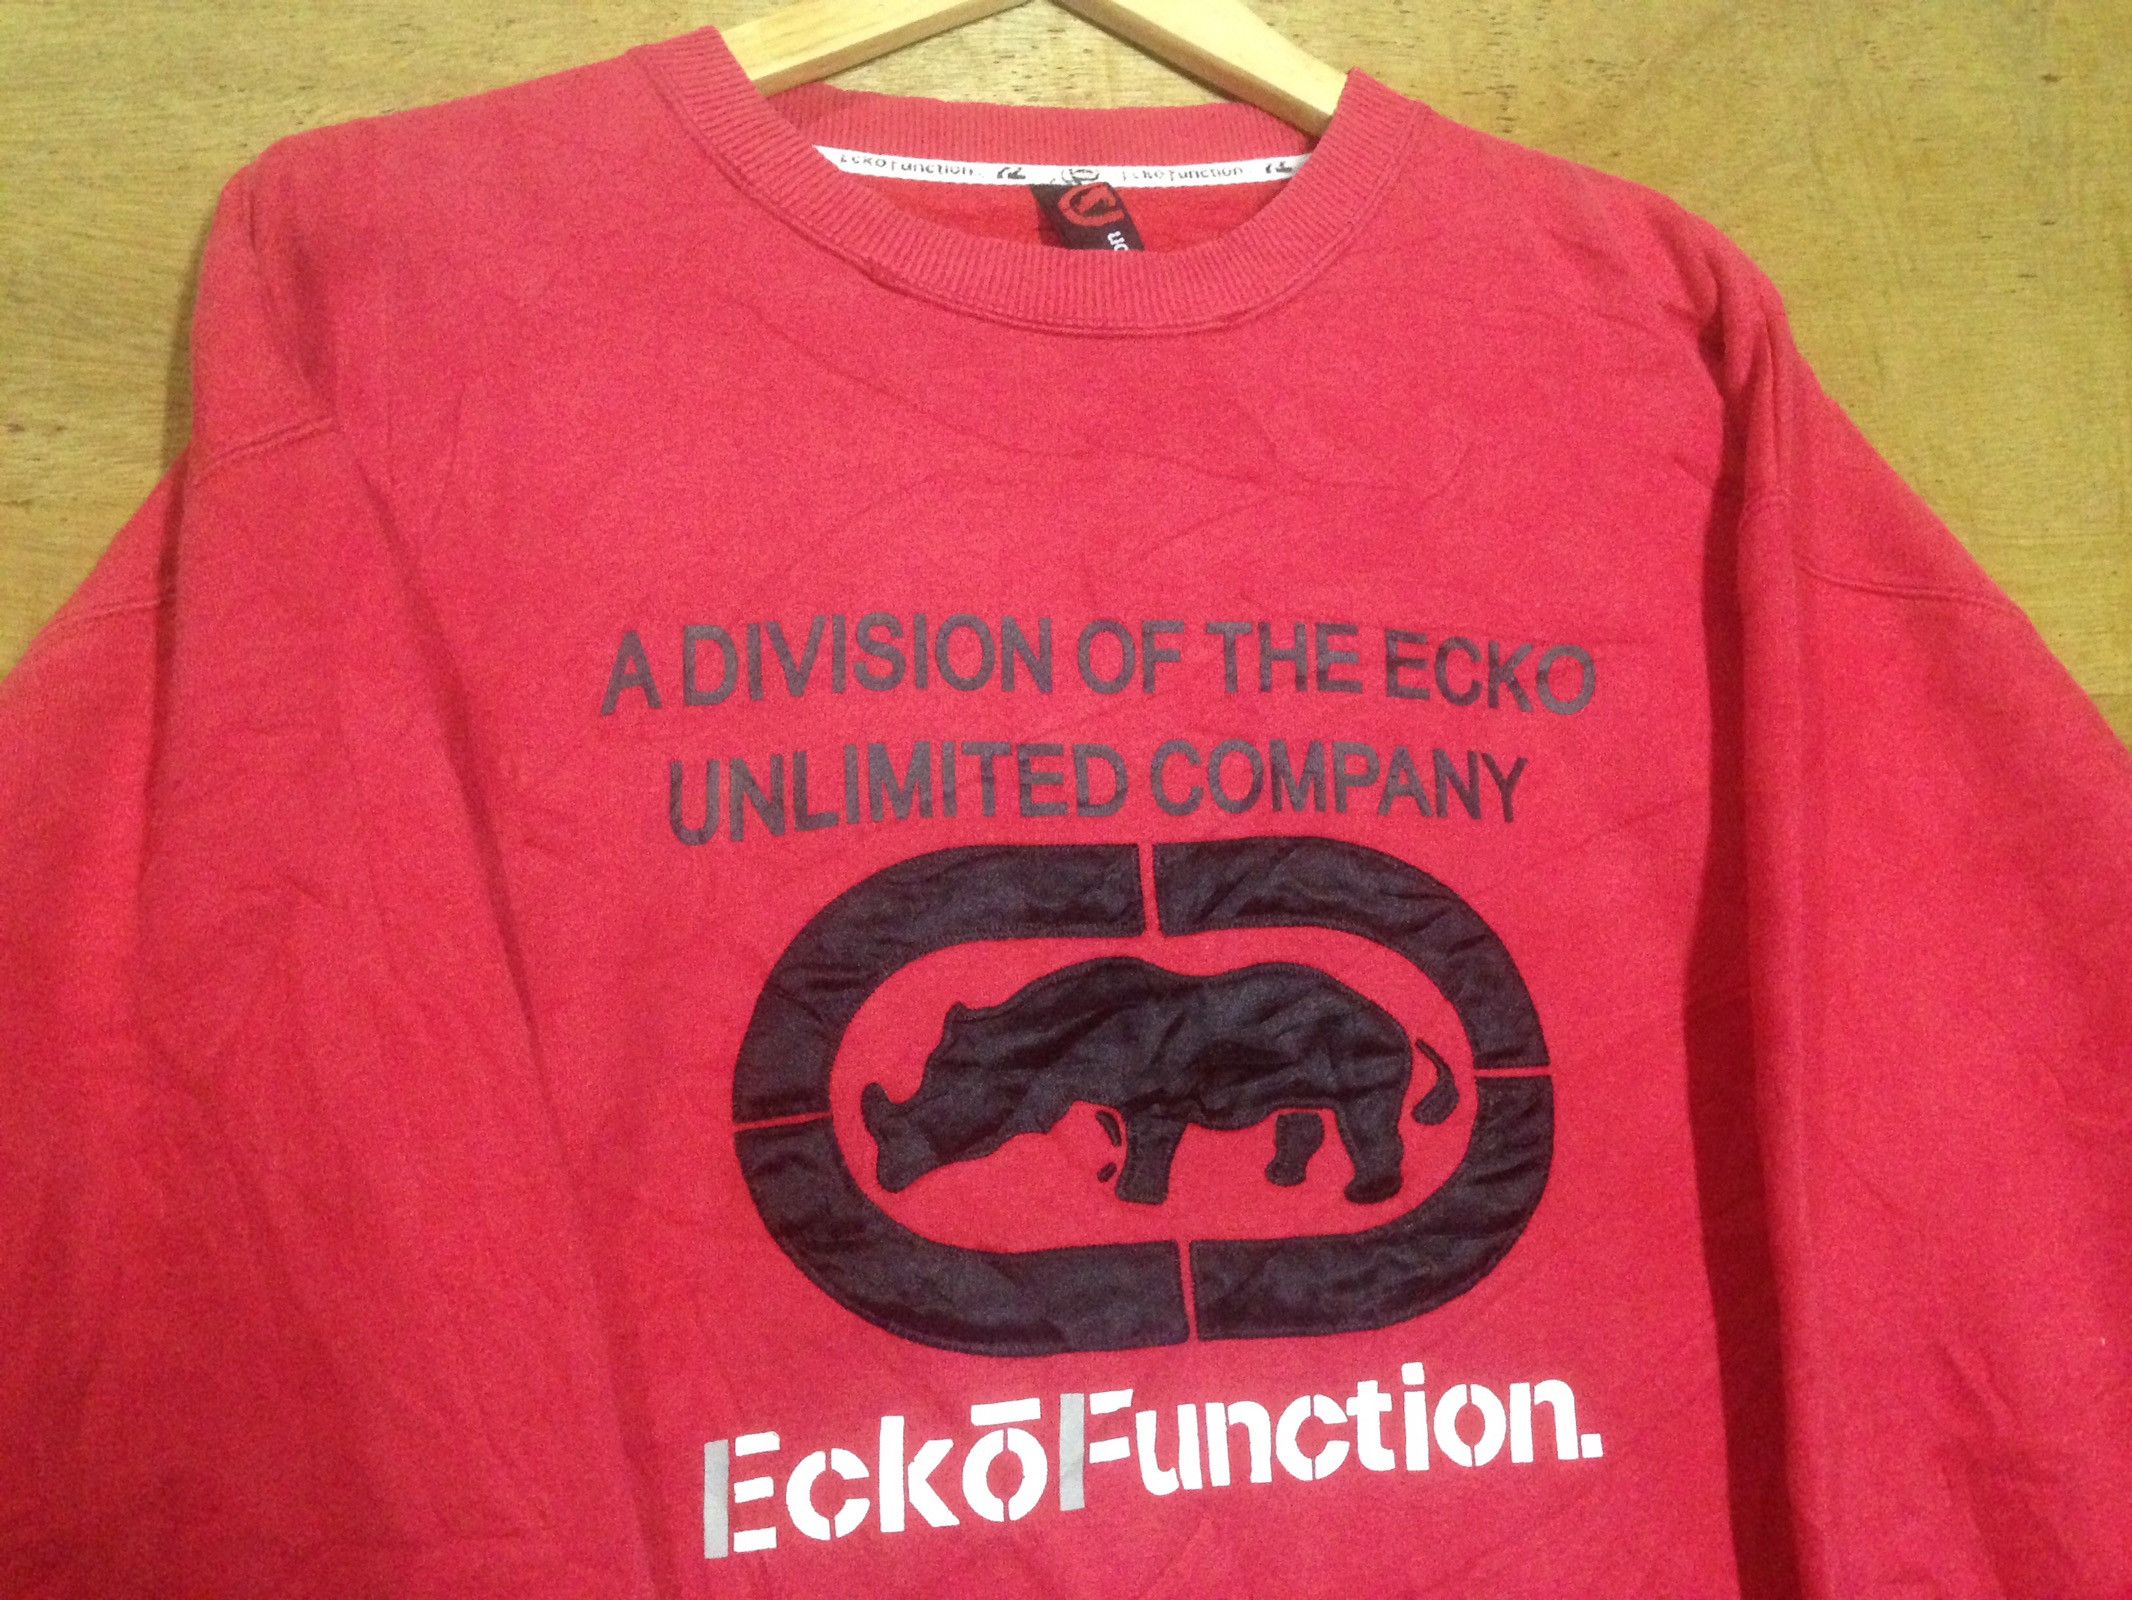 Ecko Unltd. - Ecko Function Unlimited Big Logo - 0001 - 2